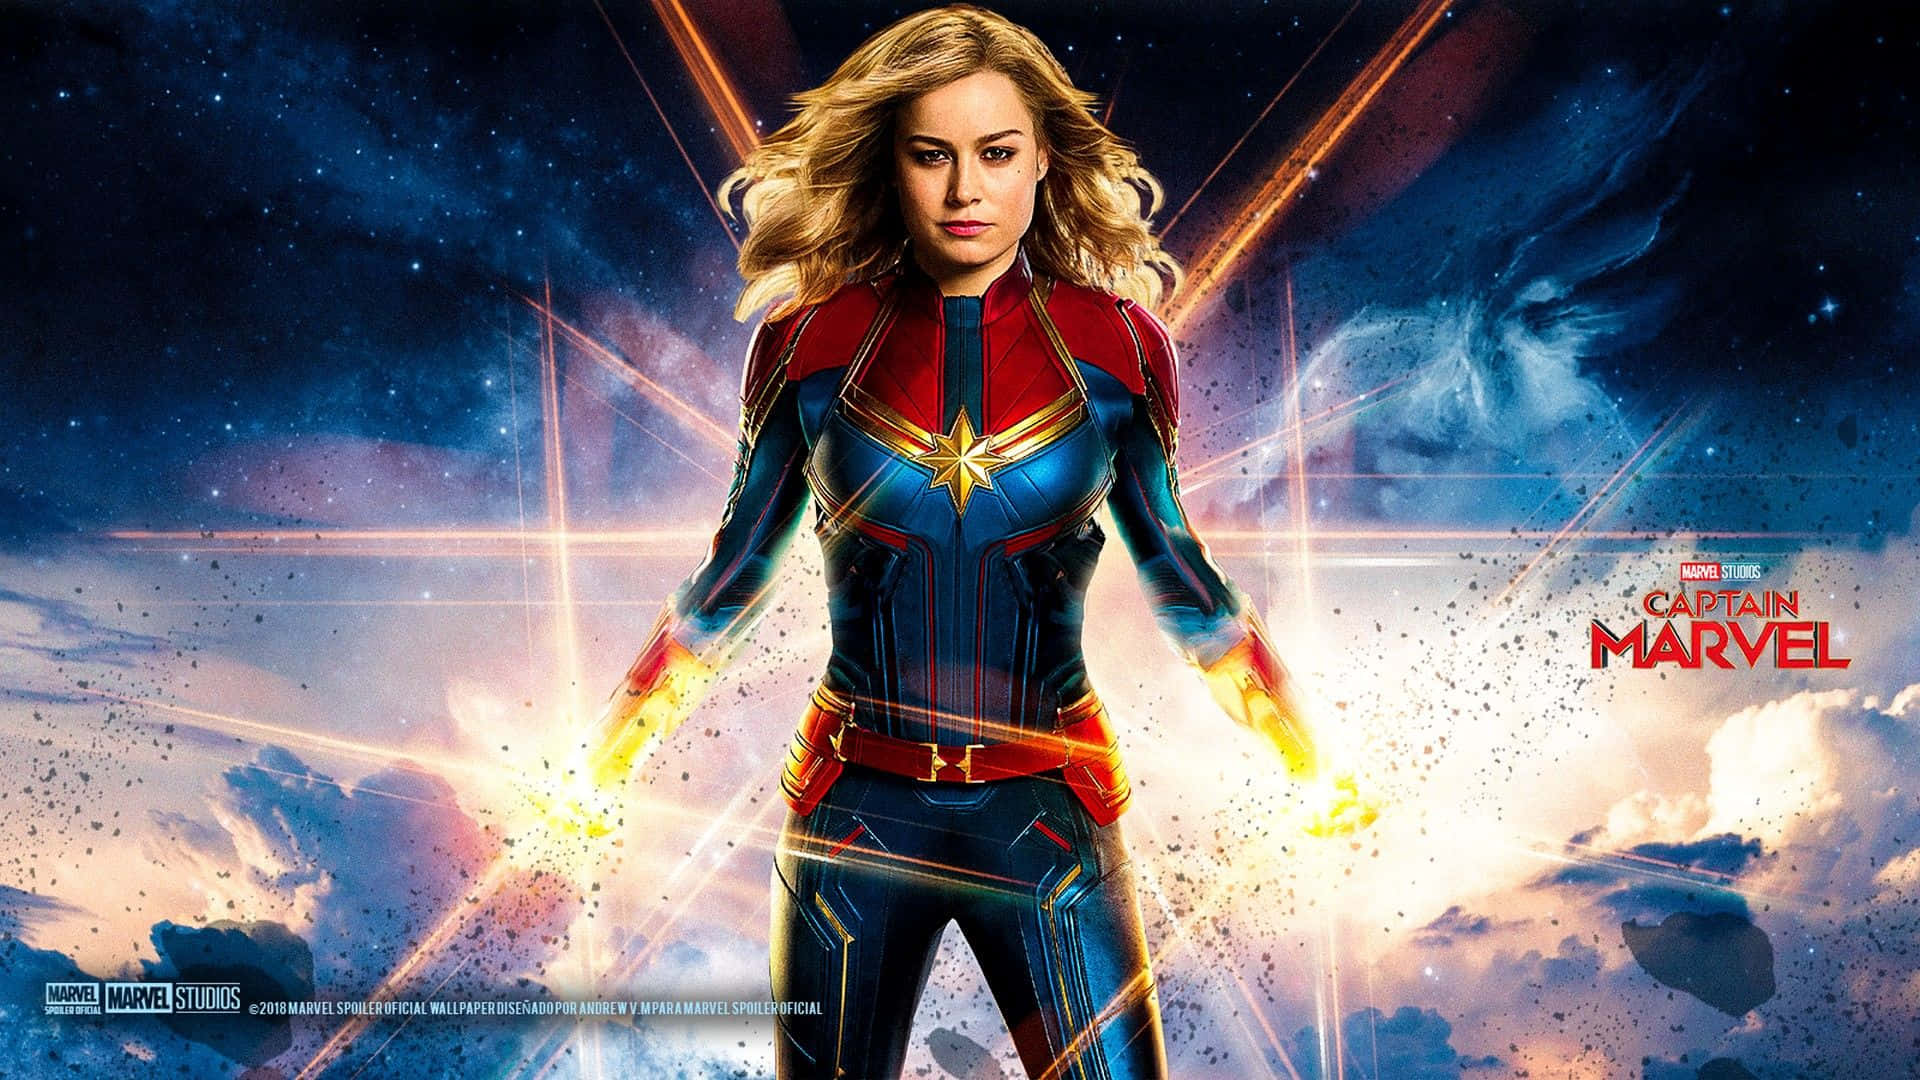 "Stay Gold" - Carol Danvers, A.K.A. Captain Marvel